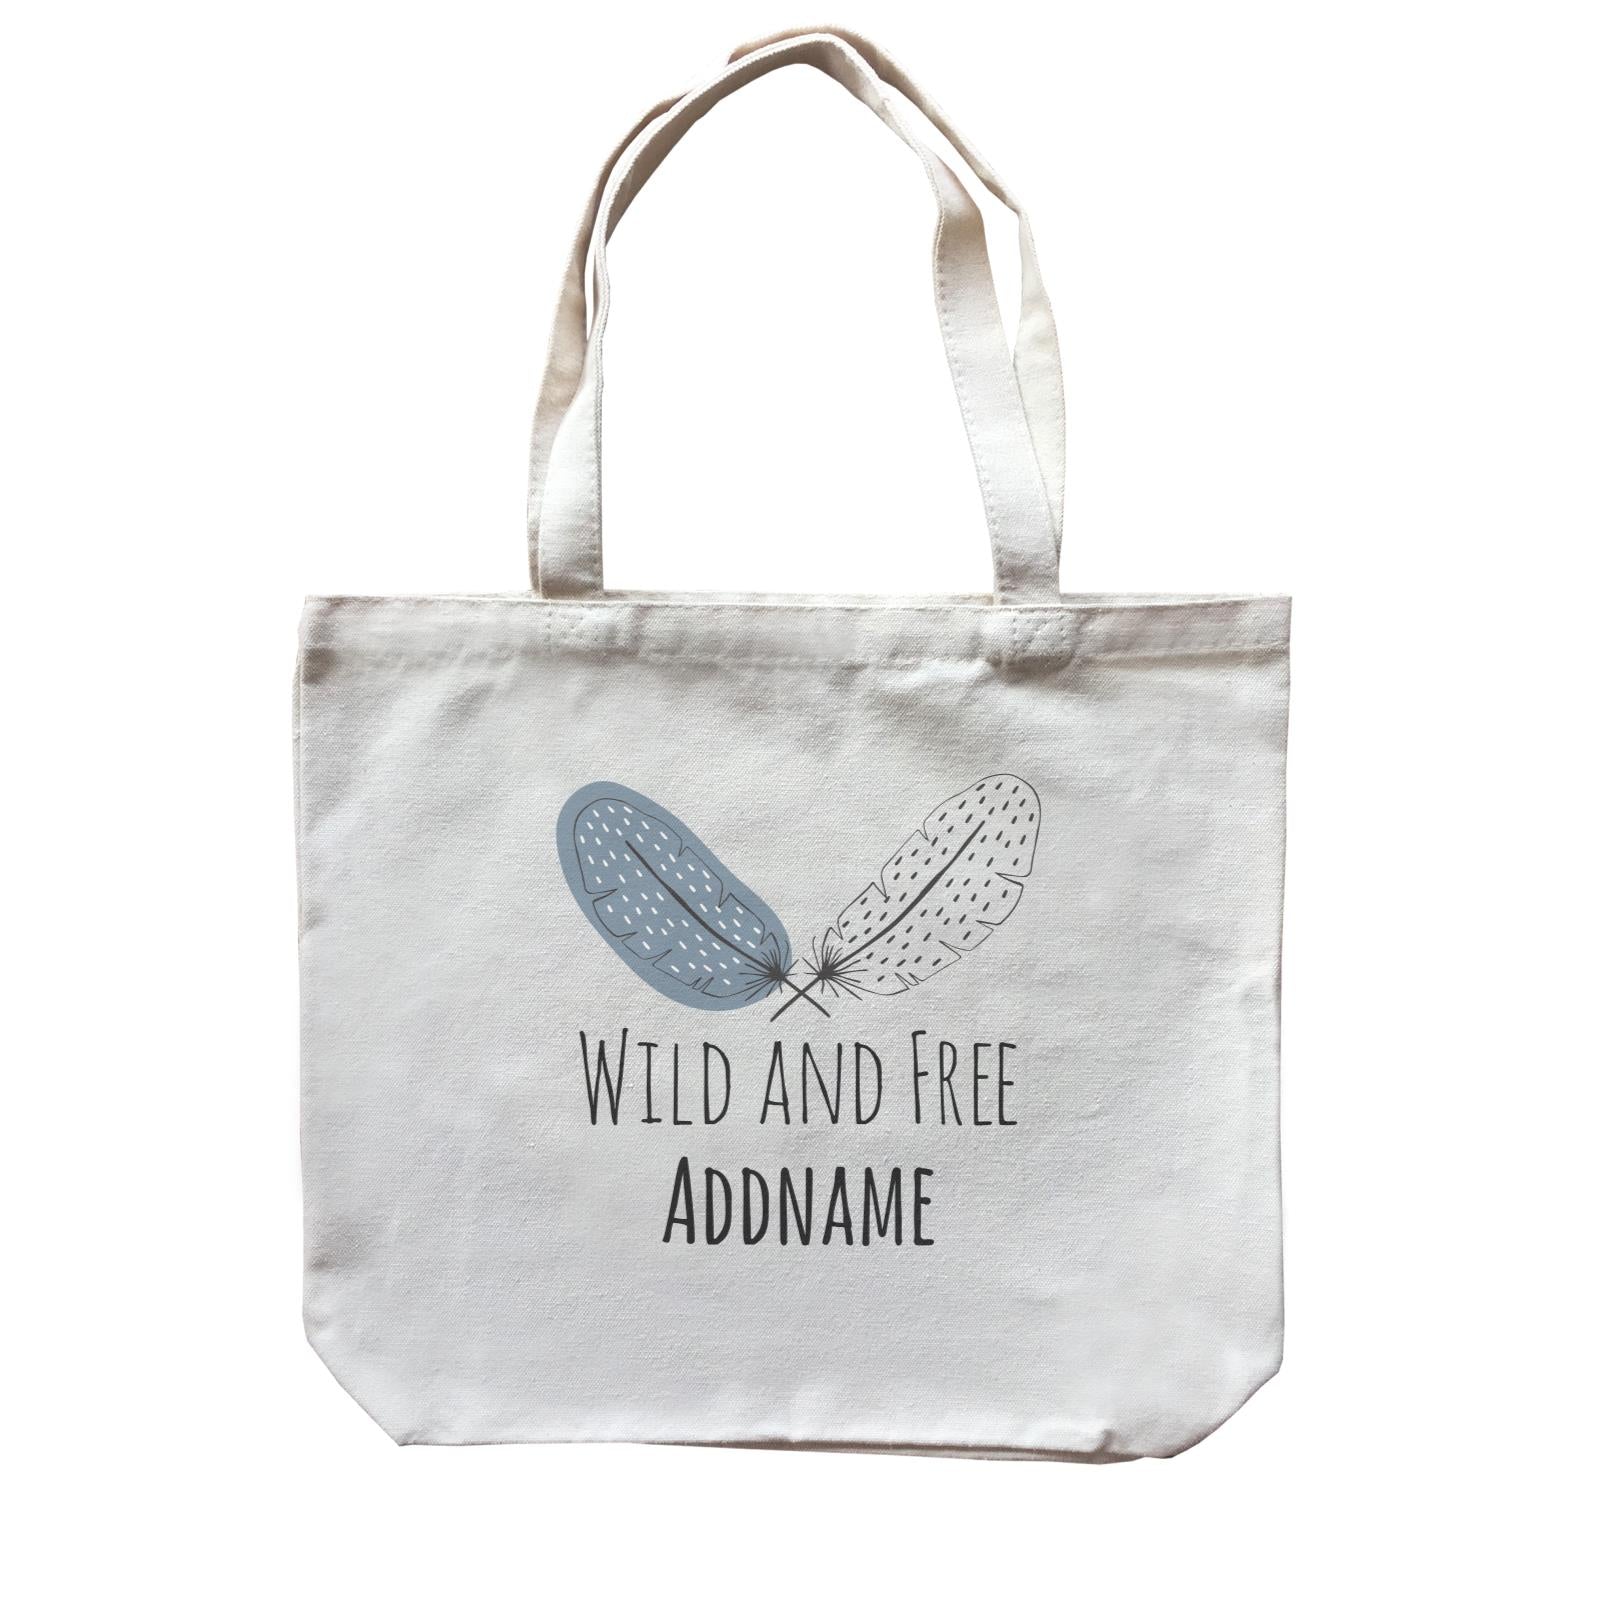 Drawn Newborn Element Wild and Free Addname Canvas Bag